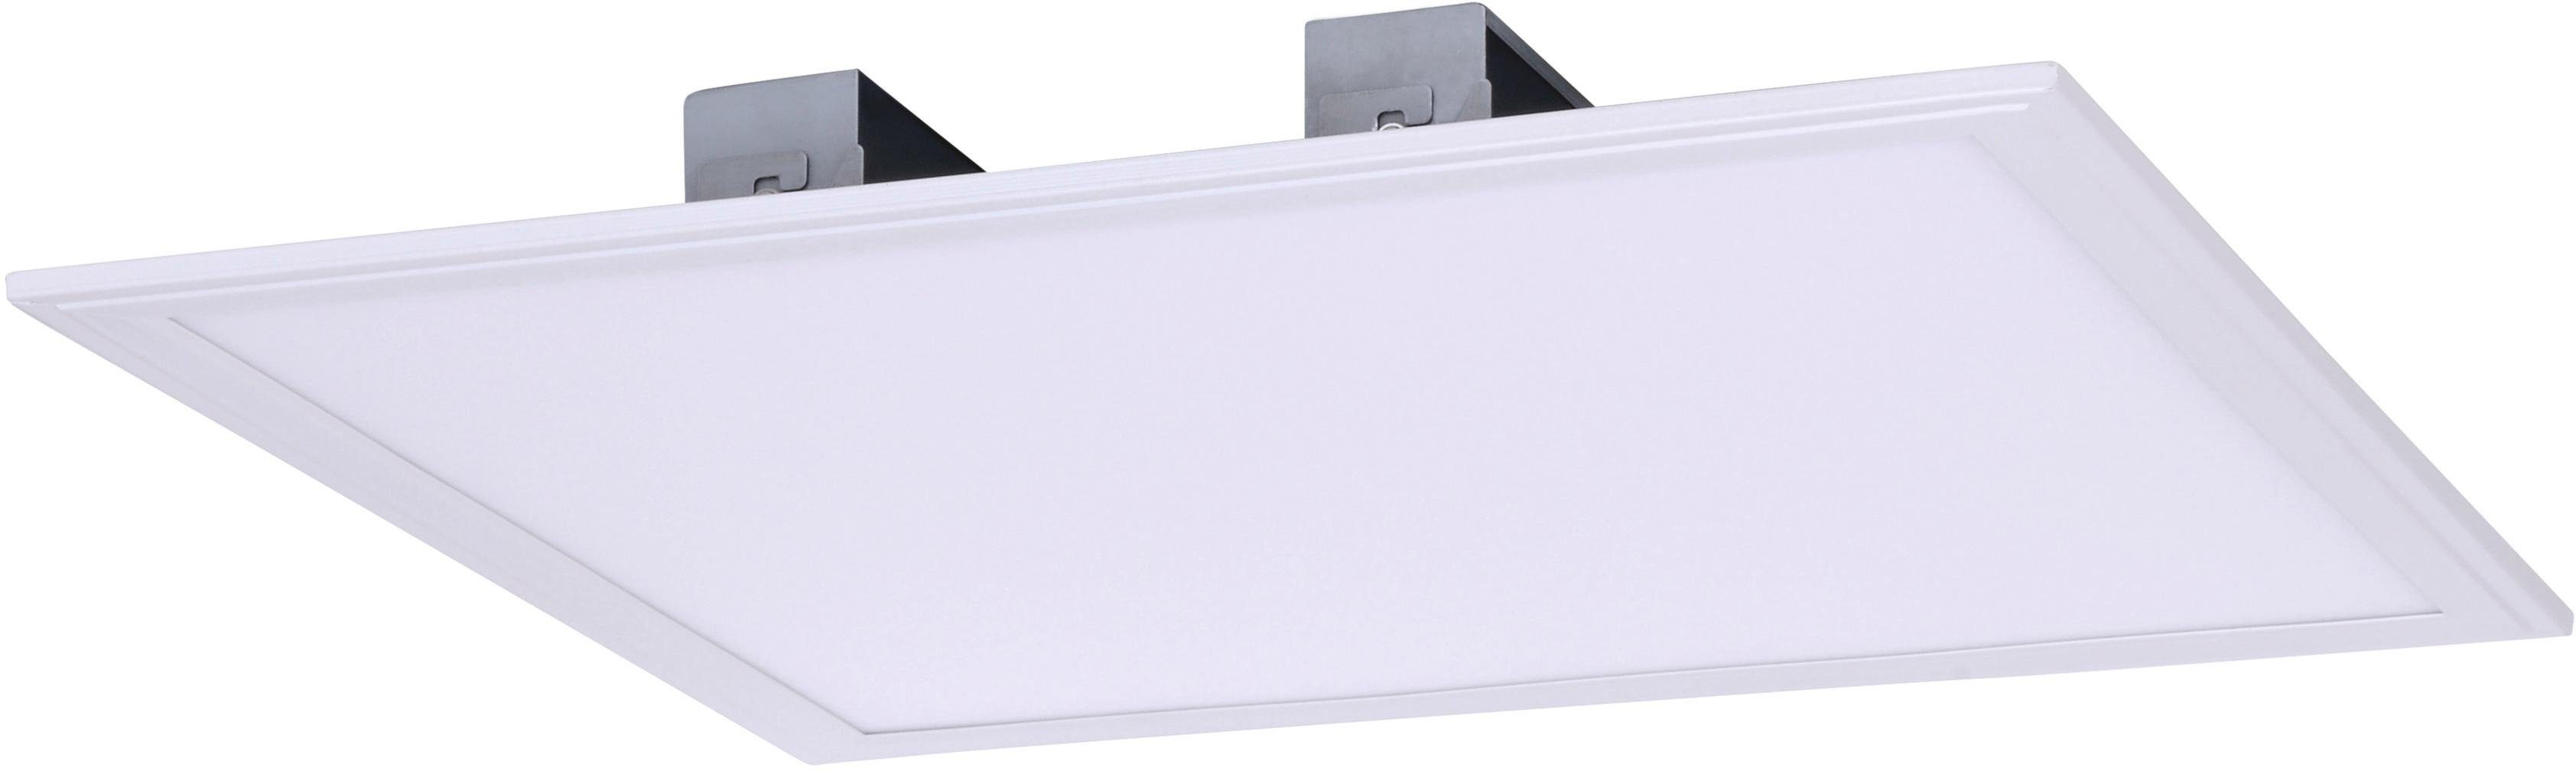 näve LED Panel LED Energieeffizienz: Treiber, incl. PANEL, Neutralweiß, weiß integriert, fest F, LED Aufbaupanel